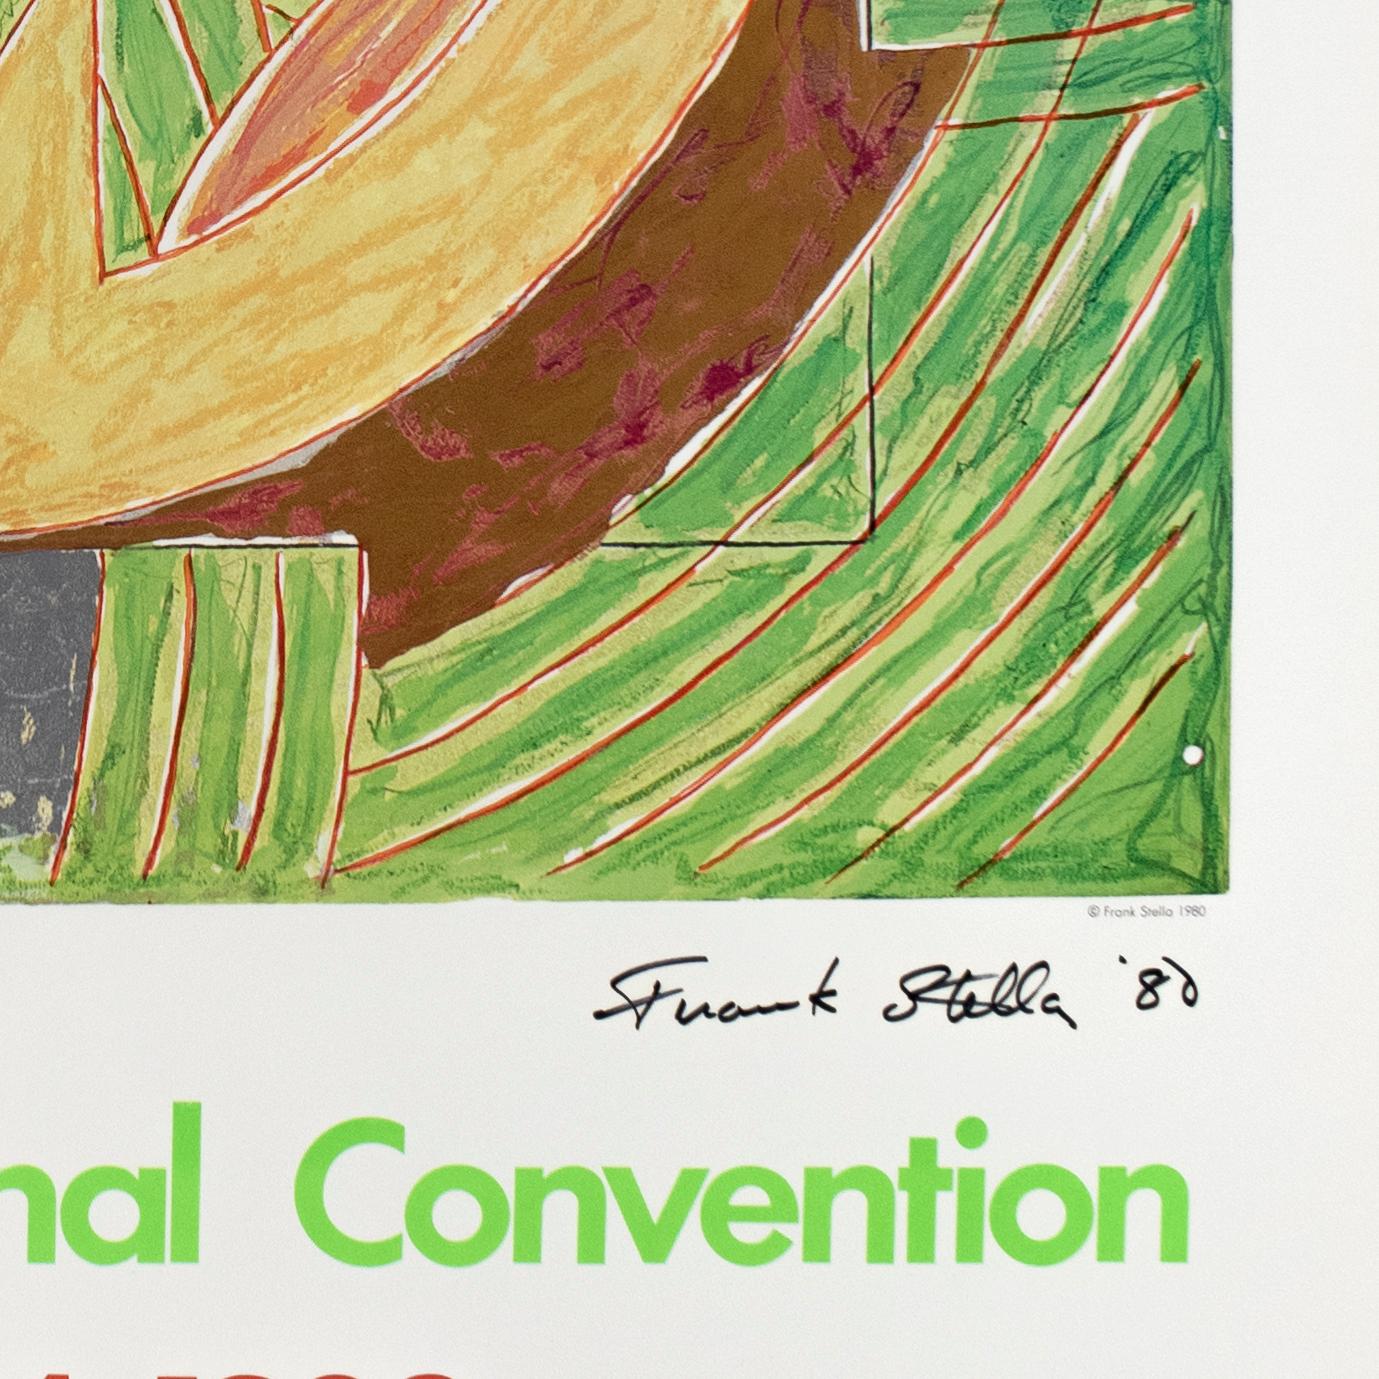 1980 Democratic Convention Frank Stella SIGNED colorful vintage Pop poster  2